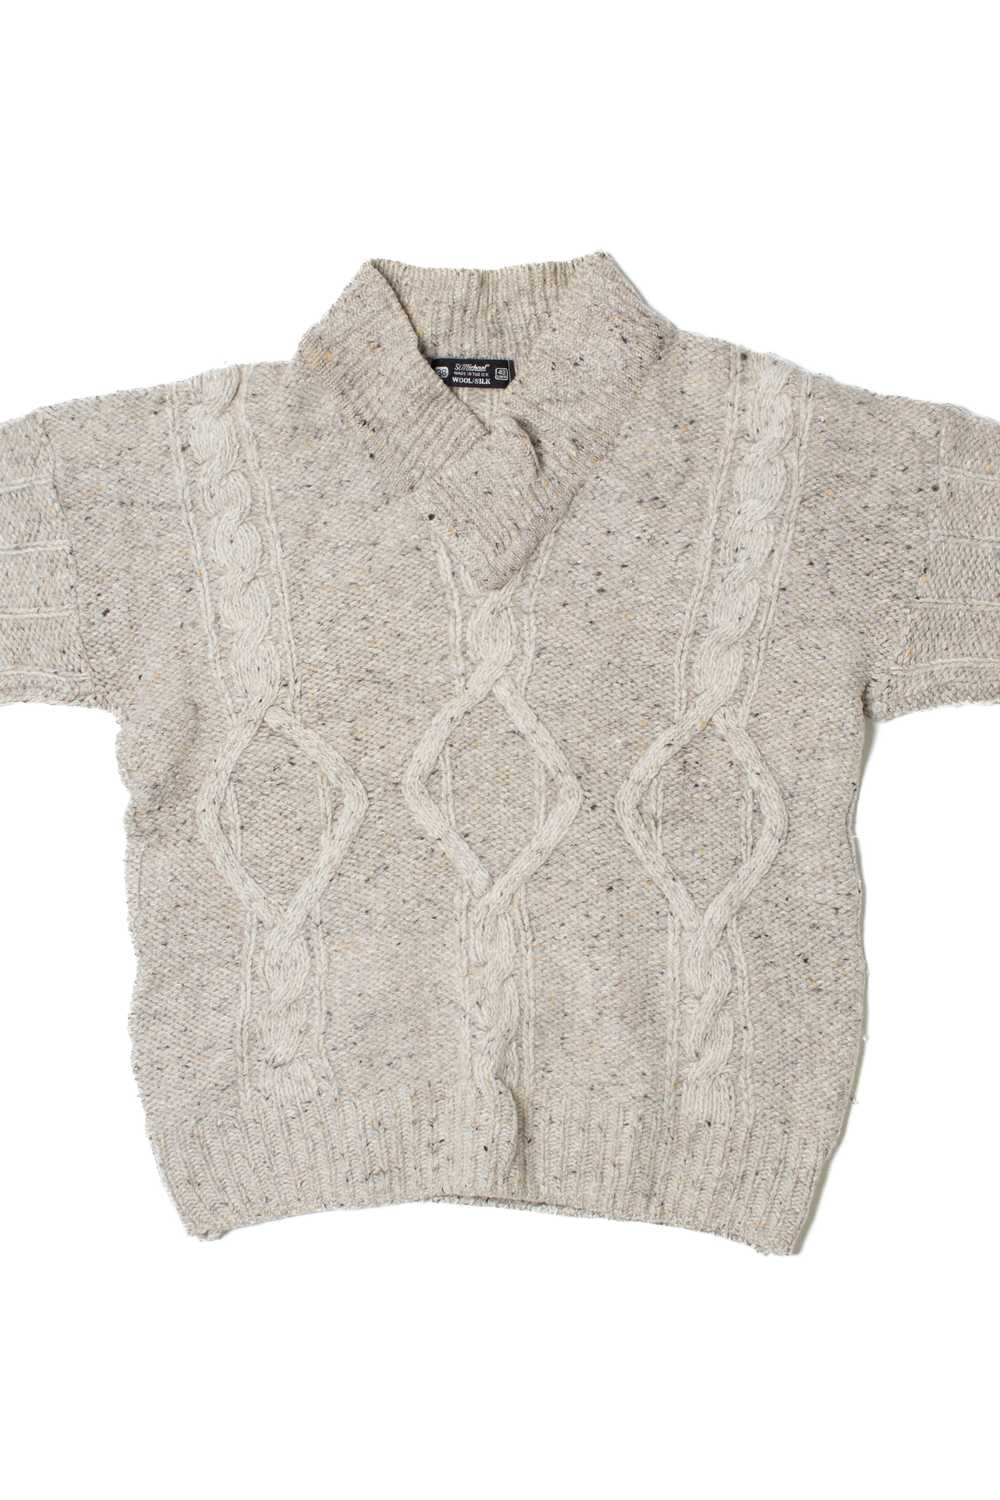 Vintage St. Michael Fisherman Sweater - image 3